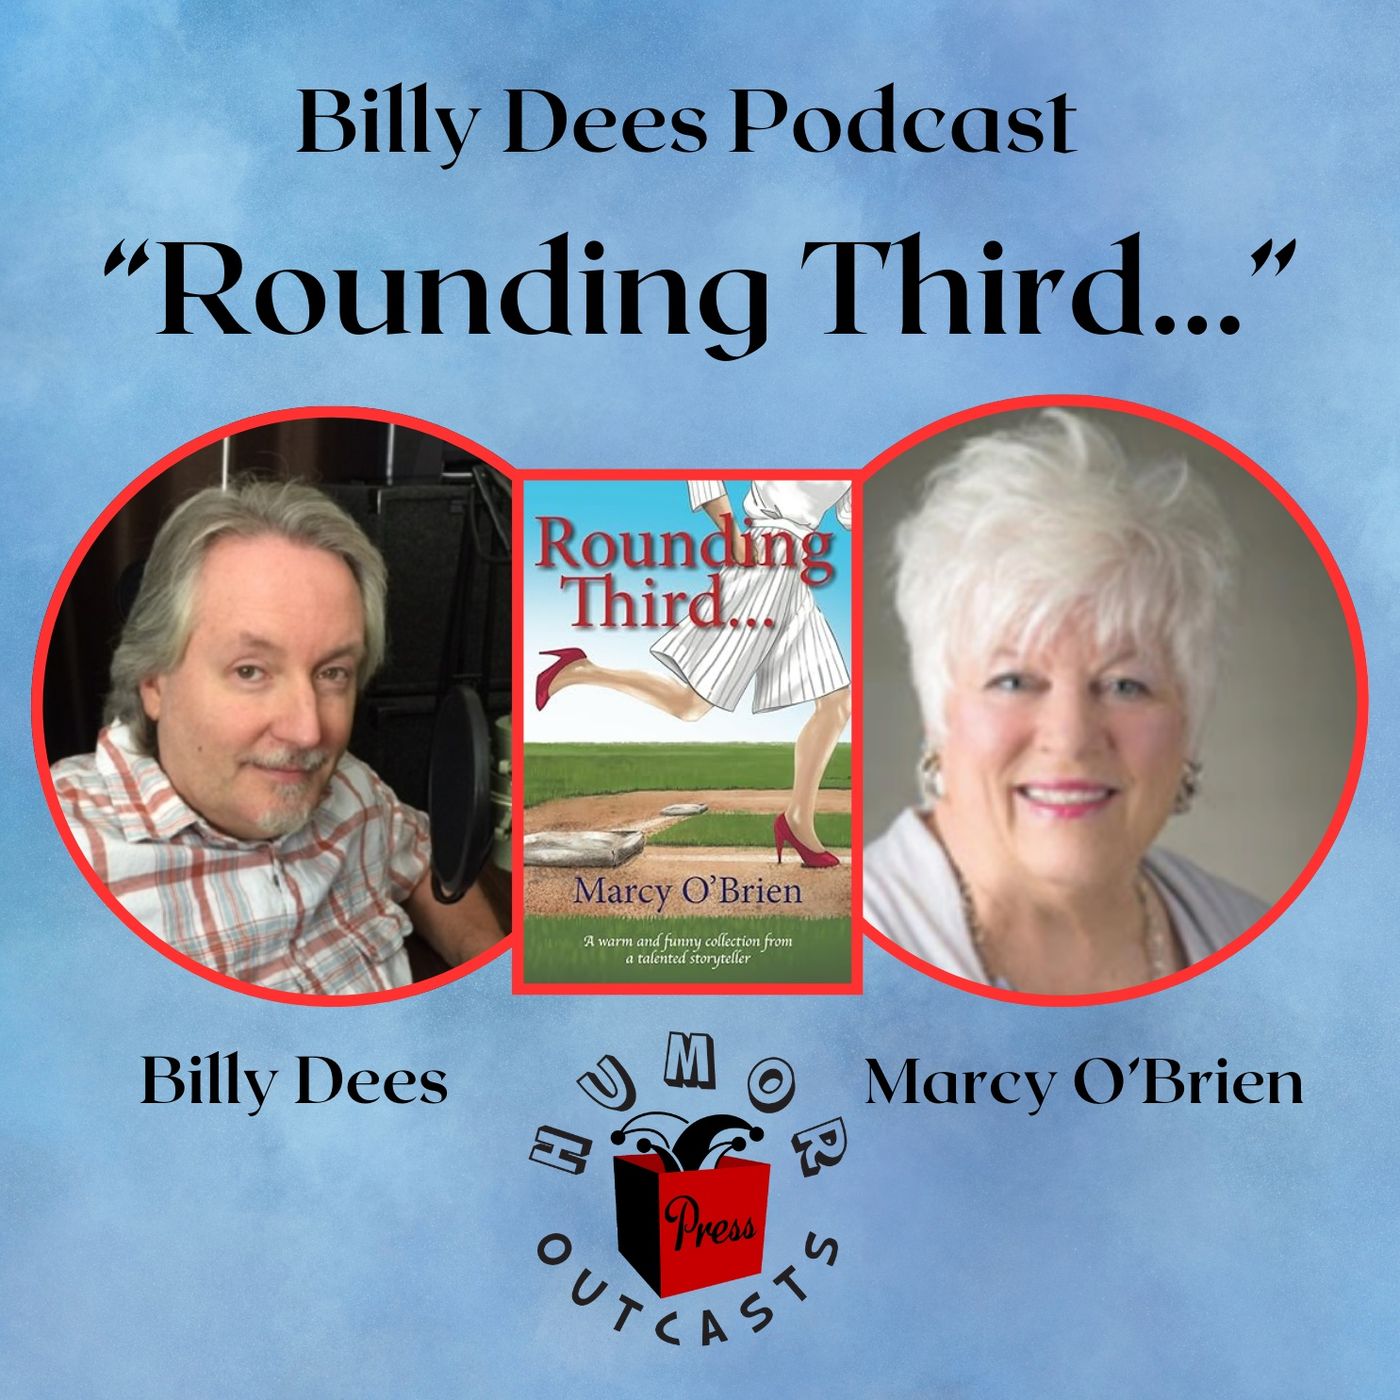 HOPress - Marcy O'Brien Author - "Rounding Third..."